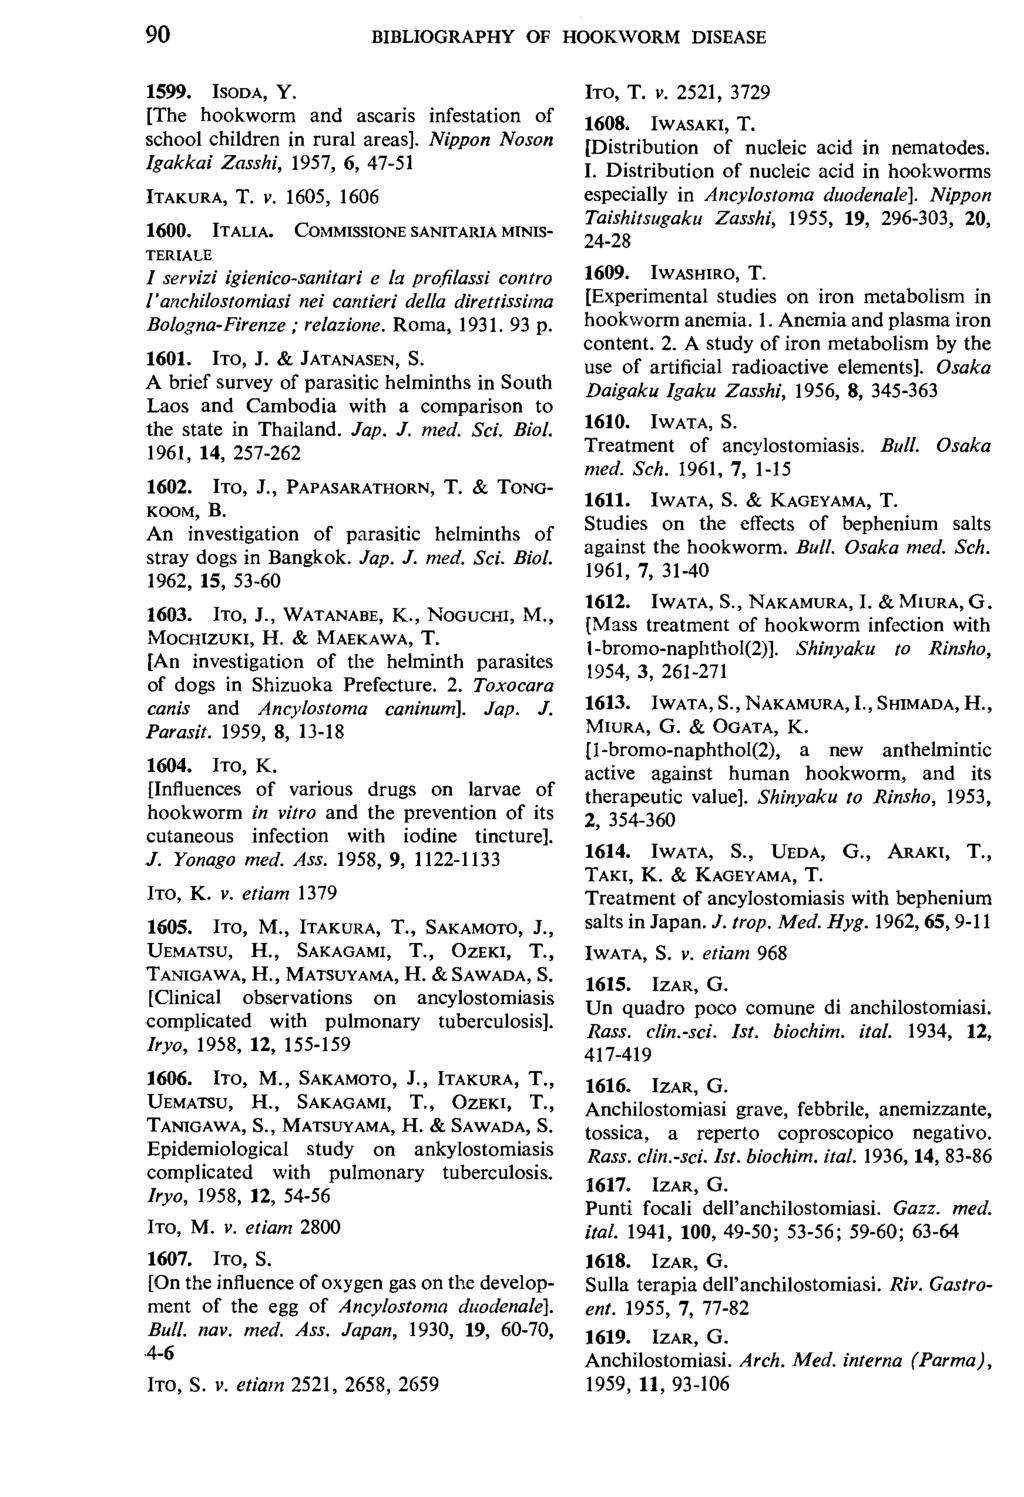 90 BIBLIOGRAPHY OF HOOKWORM DISEASE 1599. ISODA, Y. [The hookworm and ascaris infestation of school children in rural areas). Nippon Noson lgakkai Zasshi, 1957, 6, 47-51 ITAKURA, T. V.